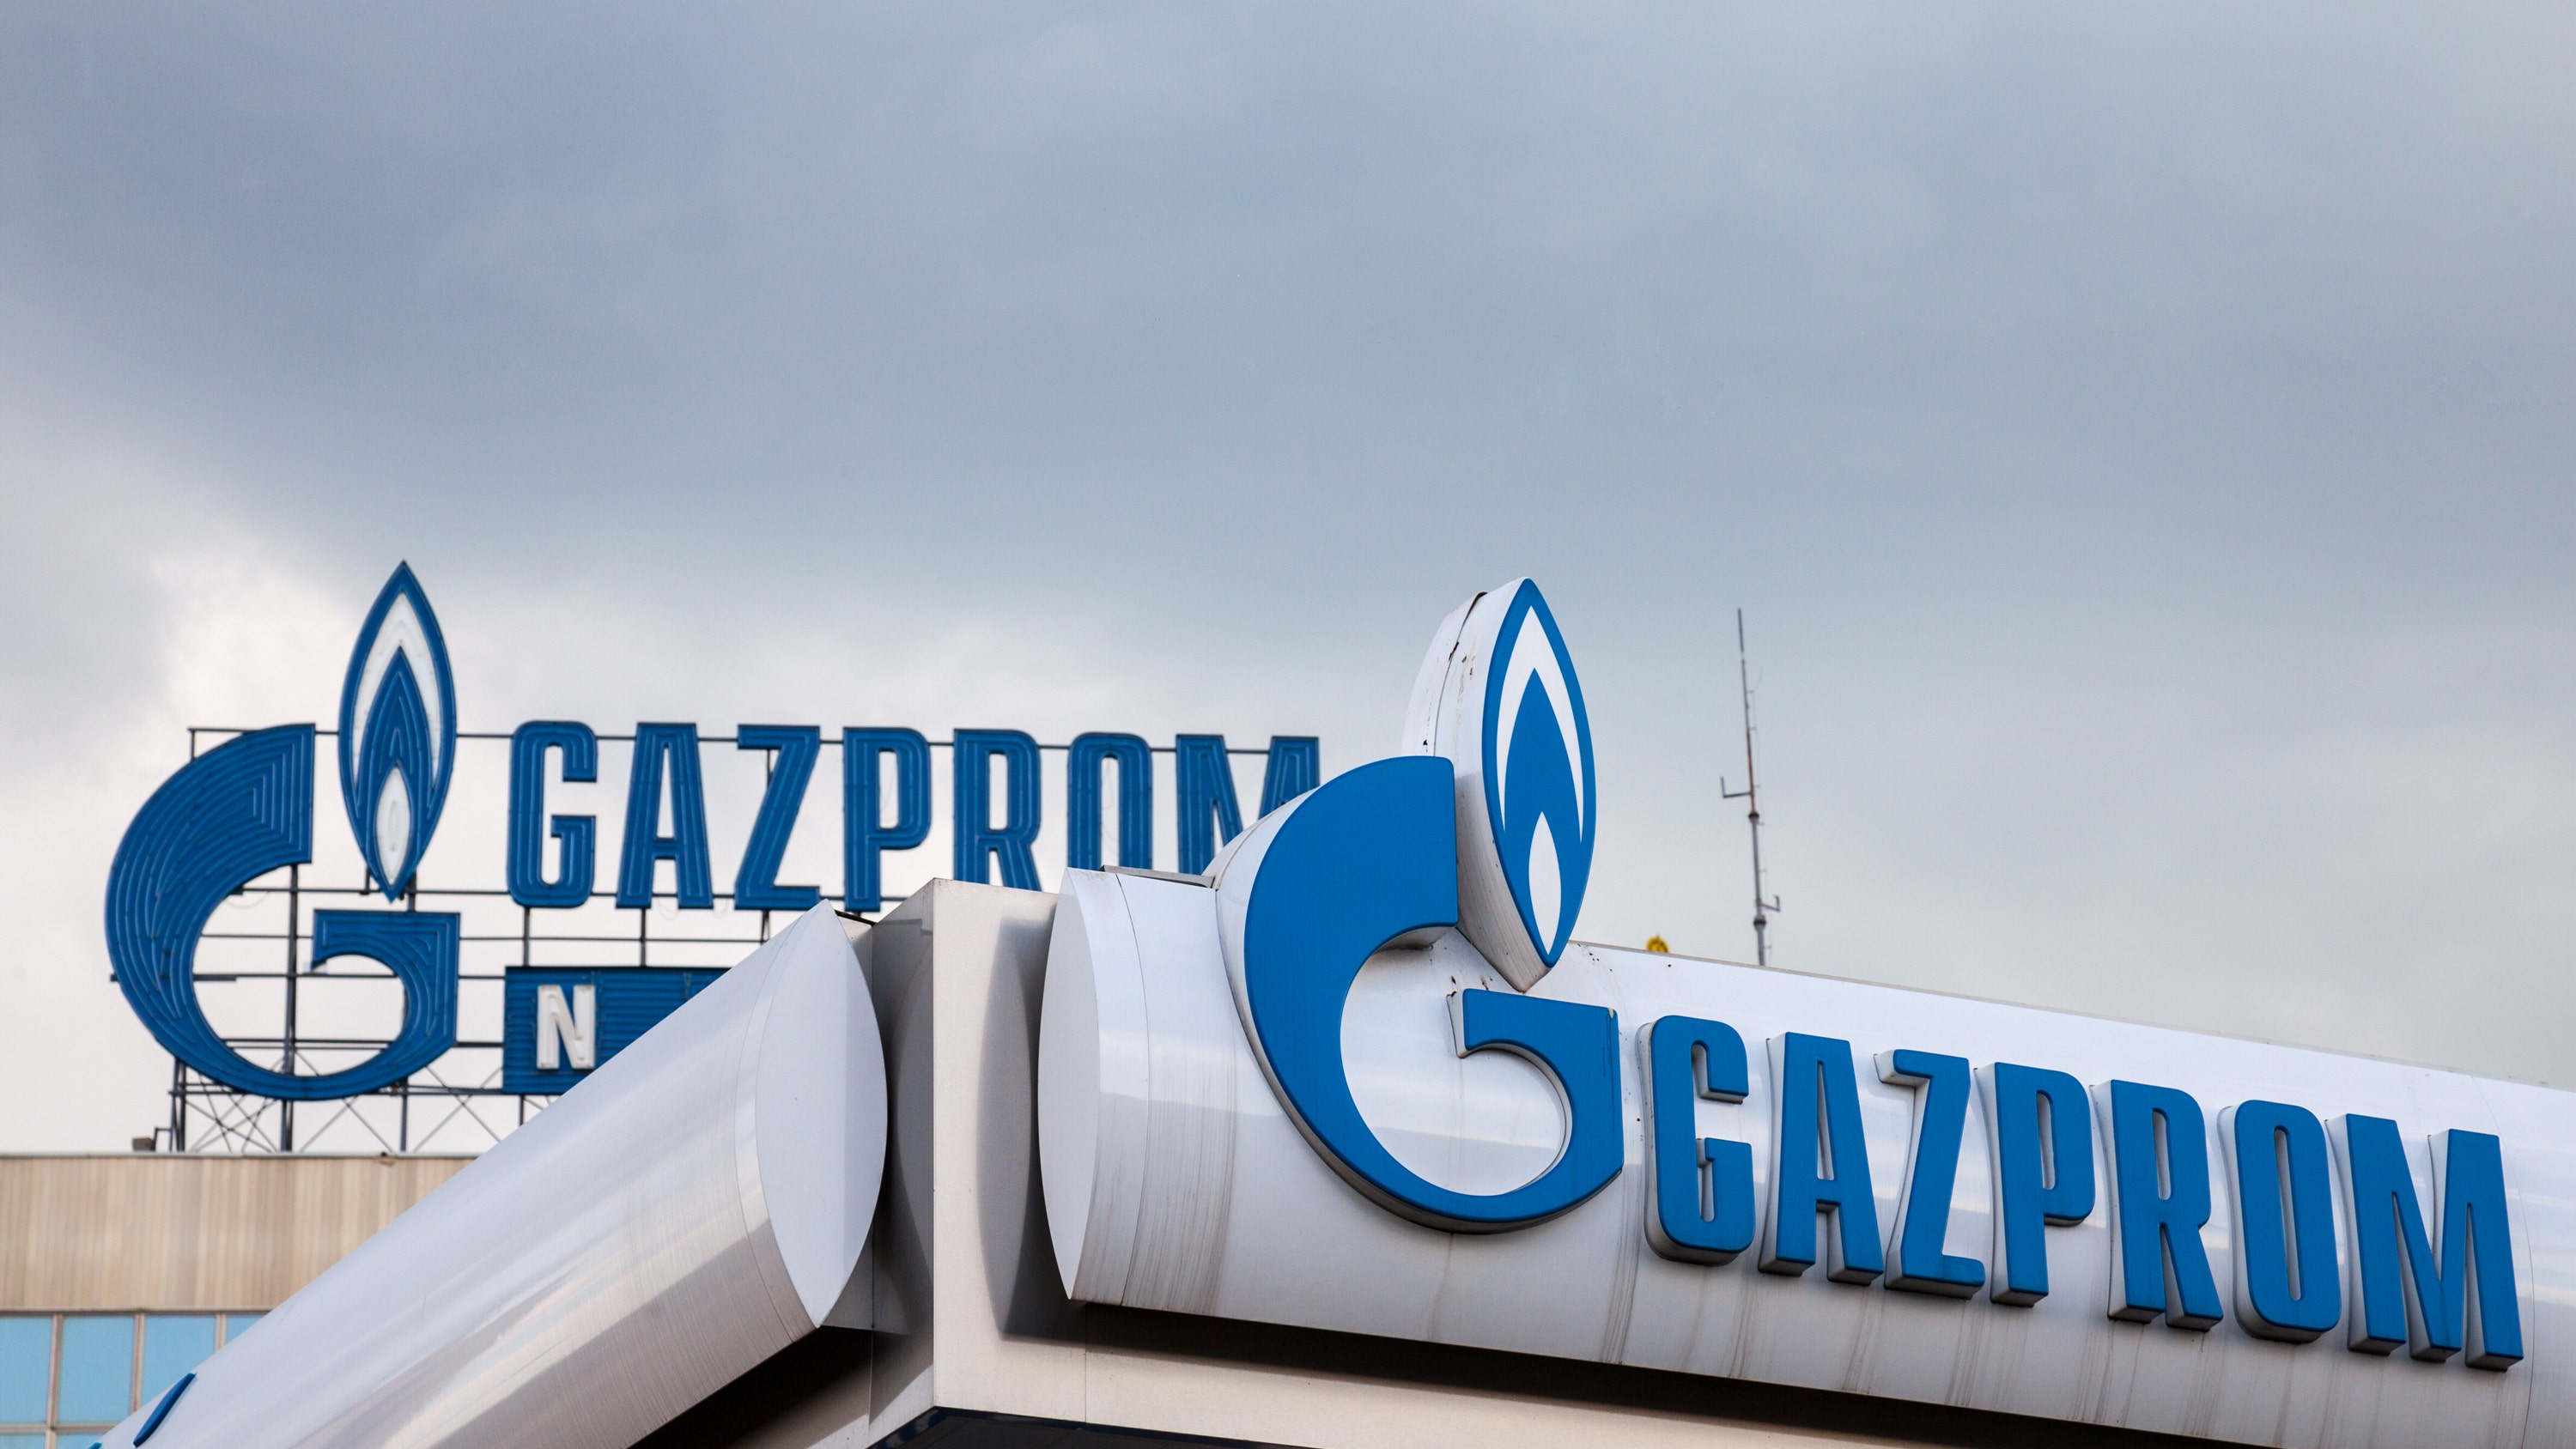 Gazprom: Avoid This Stock Due To Uncertainties | Seeking Alpha